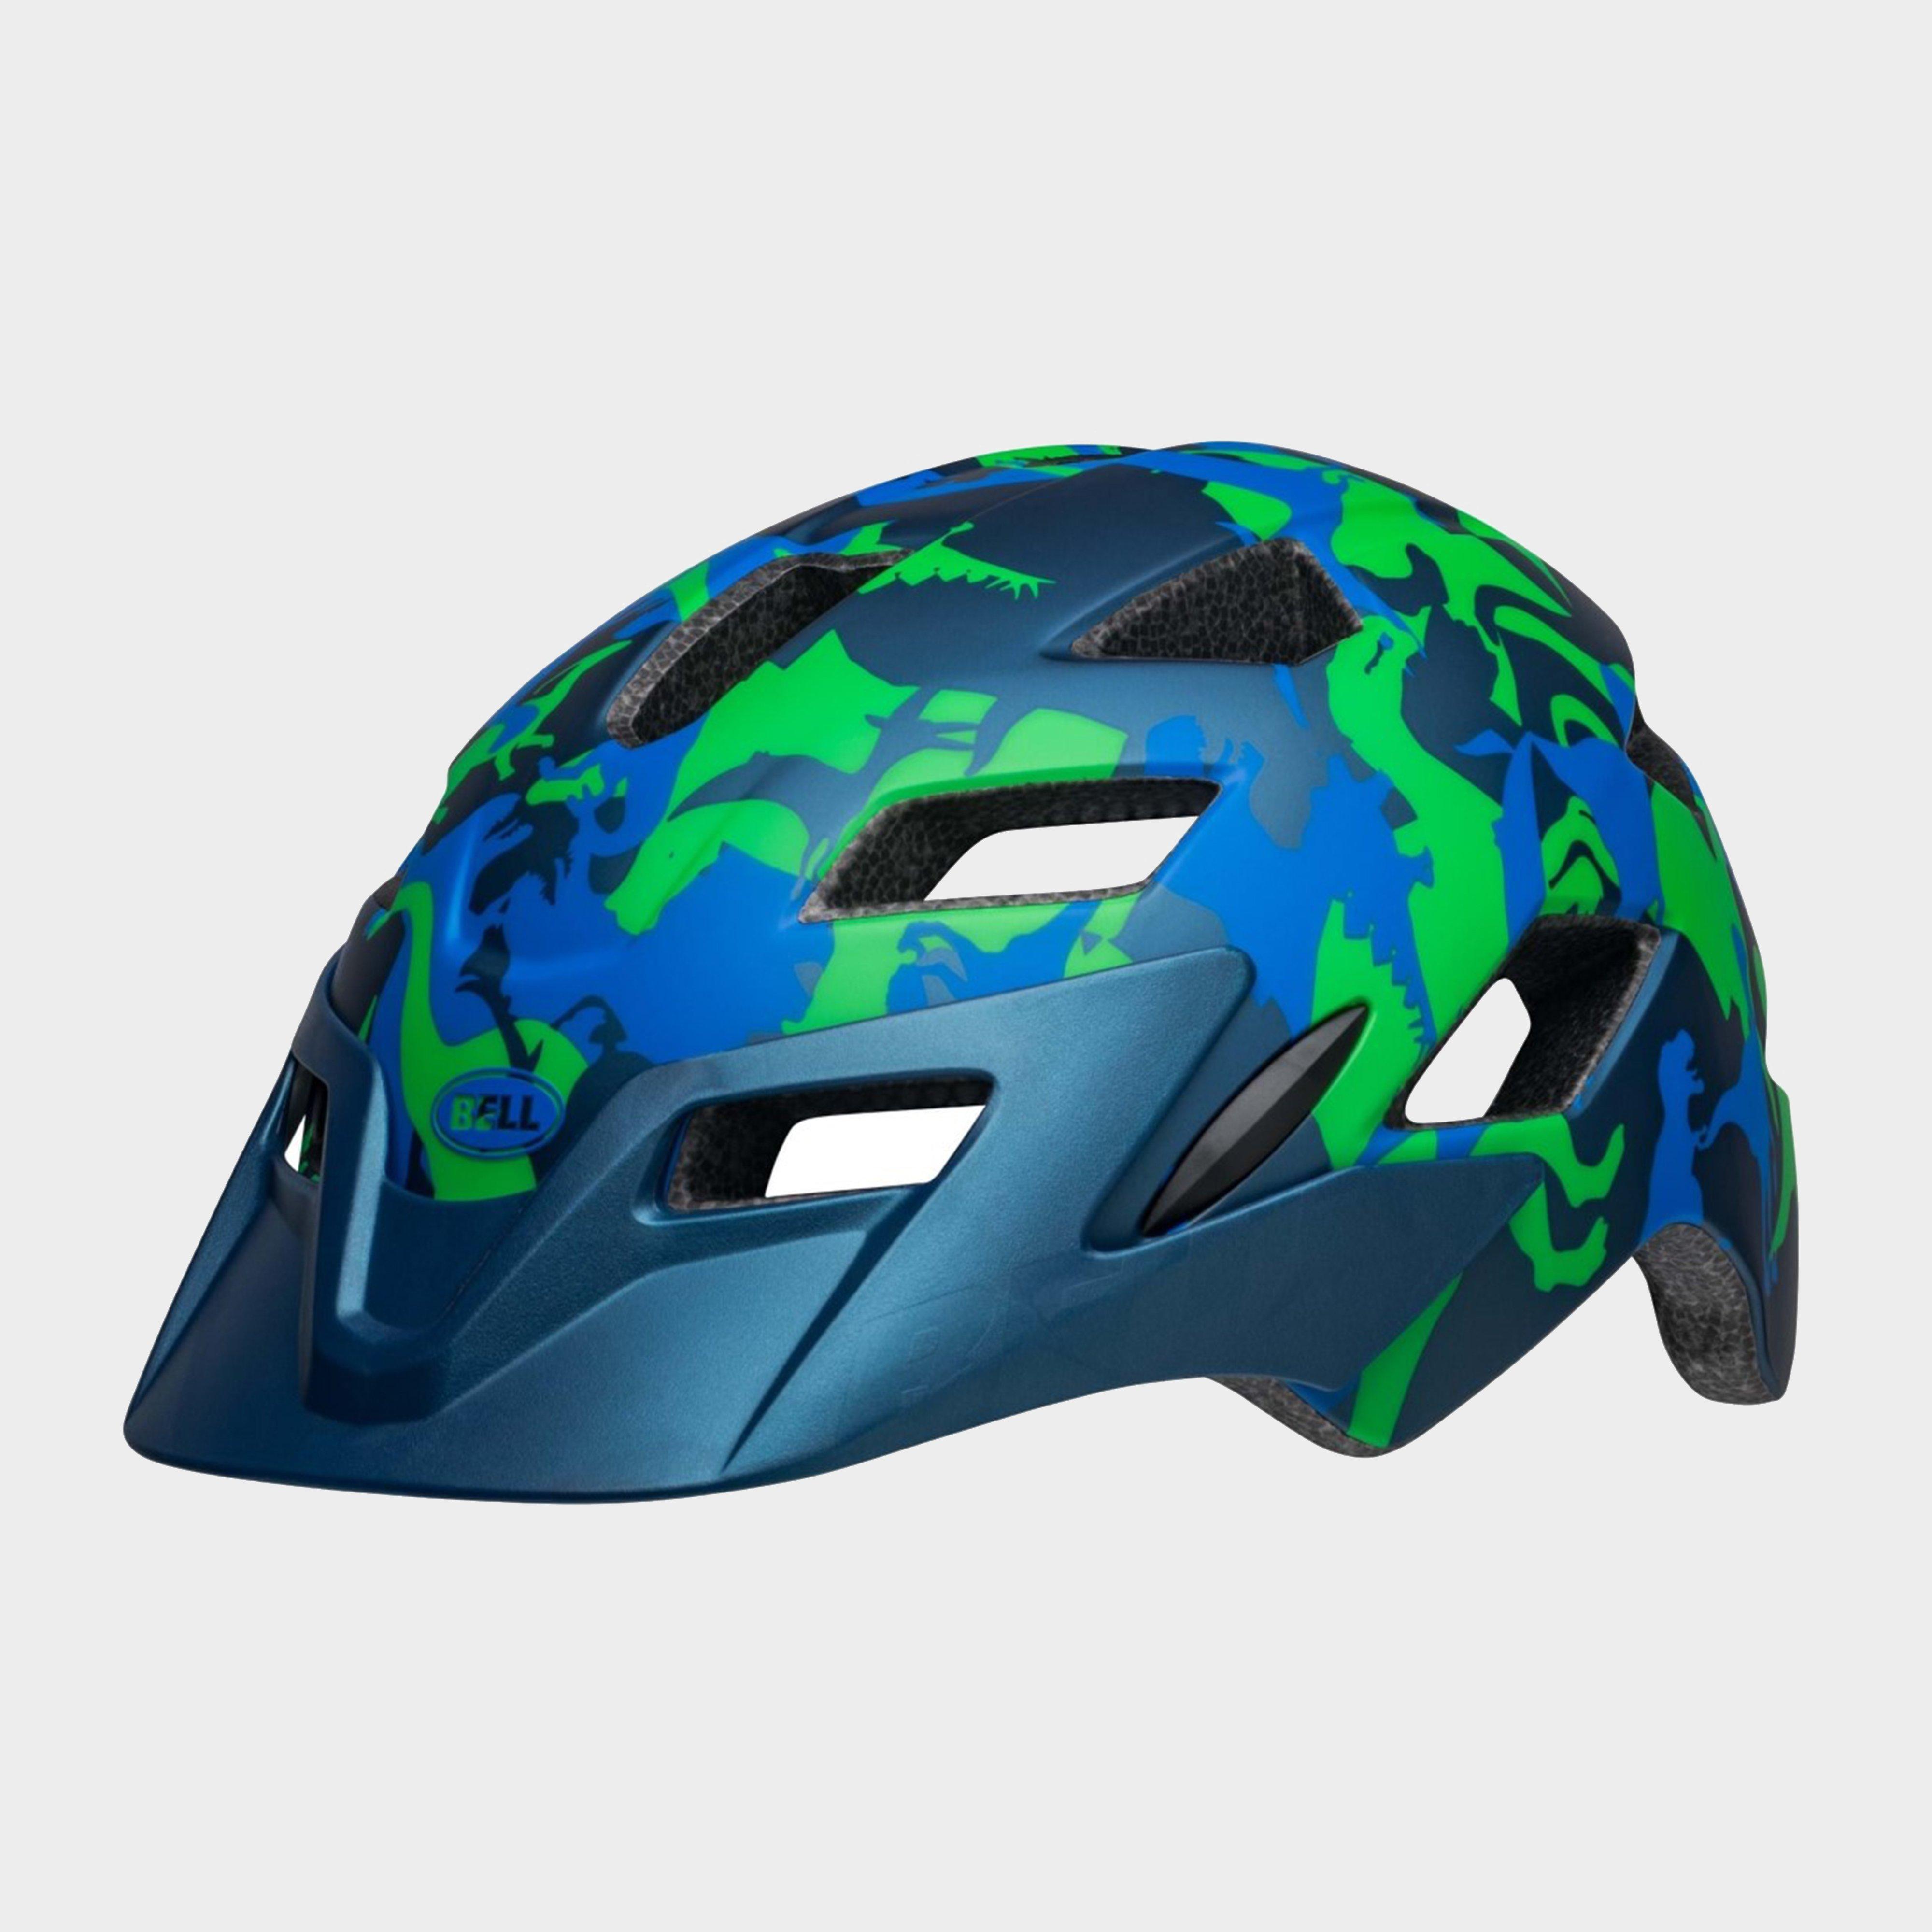  Bell Sidetrack Youth Helmet, Multi Coloured